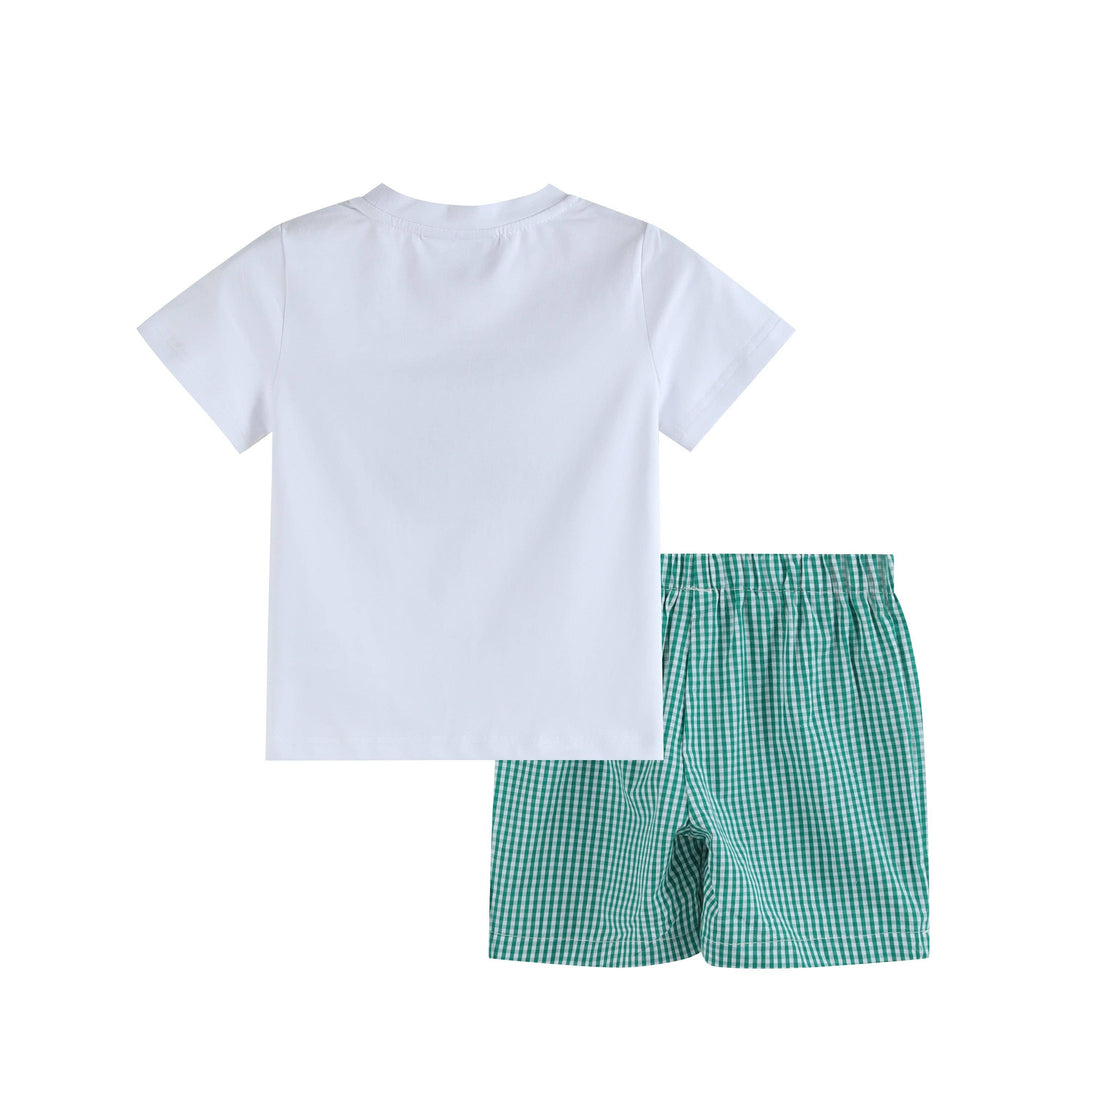 Toddler Pickleball T-Shirt and Green Gingham Shorts Set